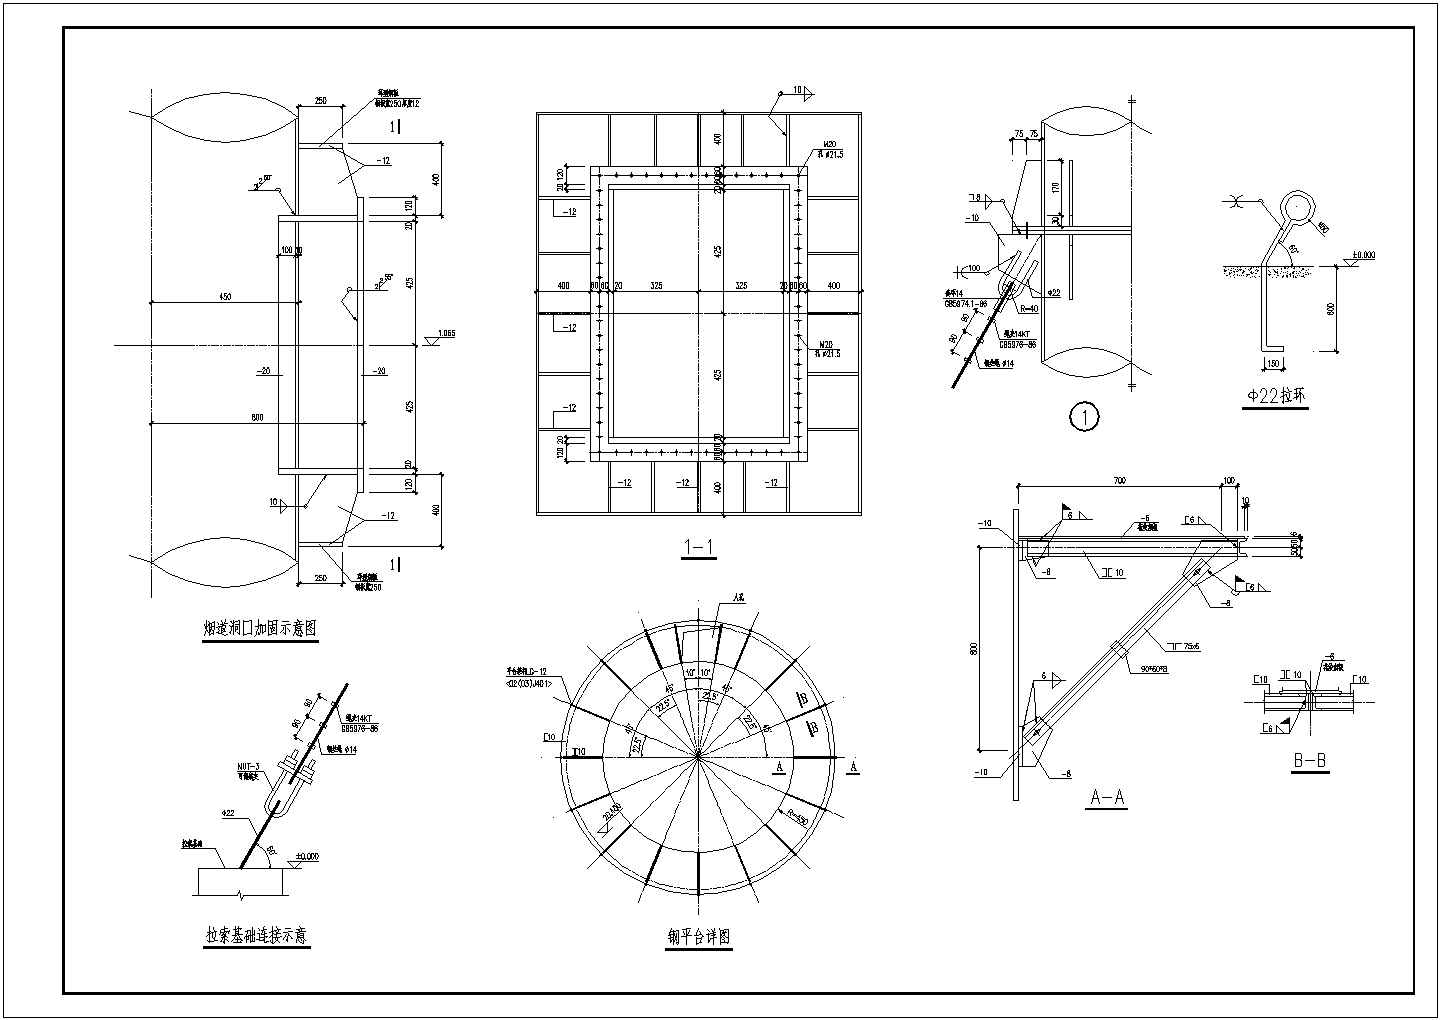 30m拉索钢烟囱详细建筑结构施工图